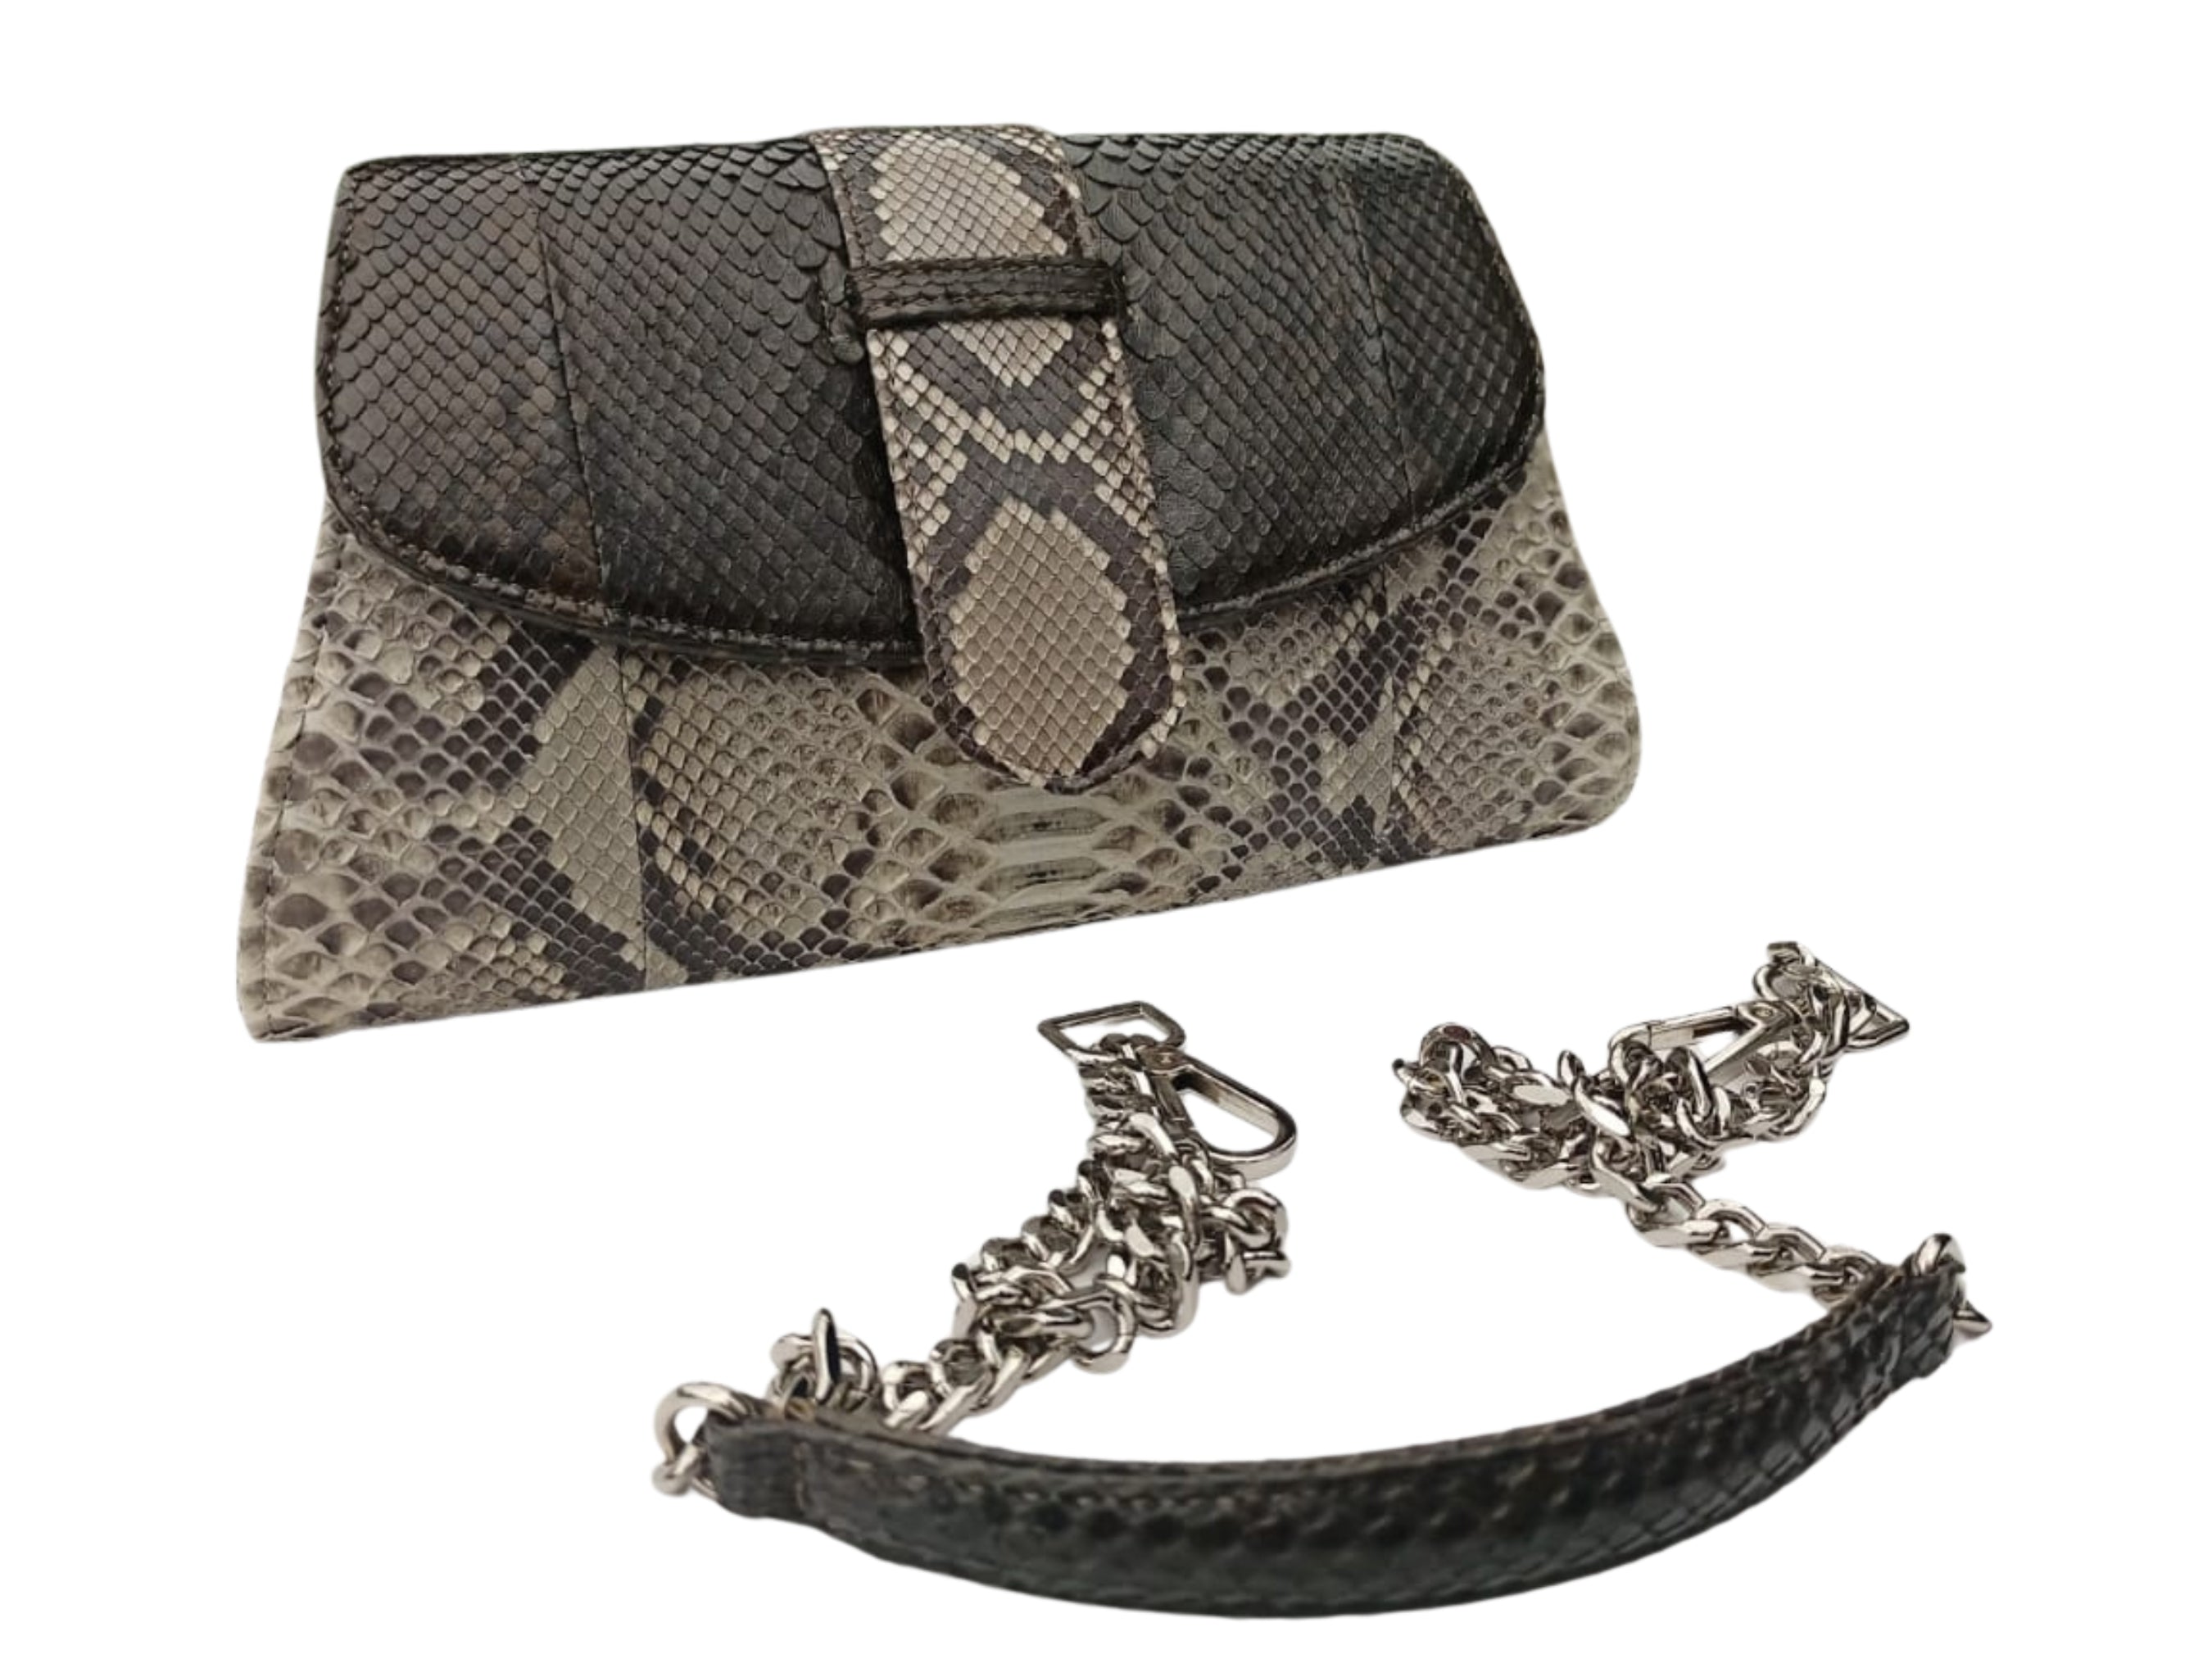 Crossbody Bag with Chain Strap - Genuine Python Snake Skin